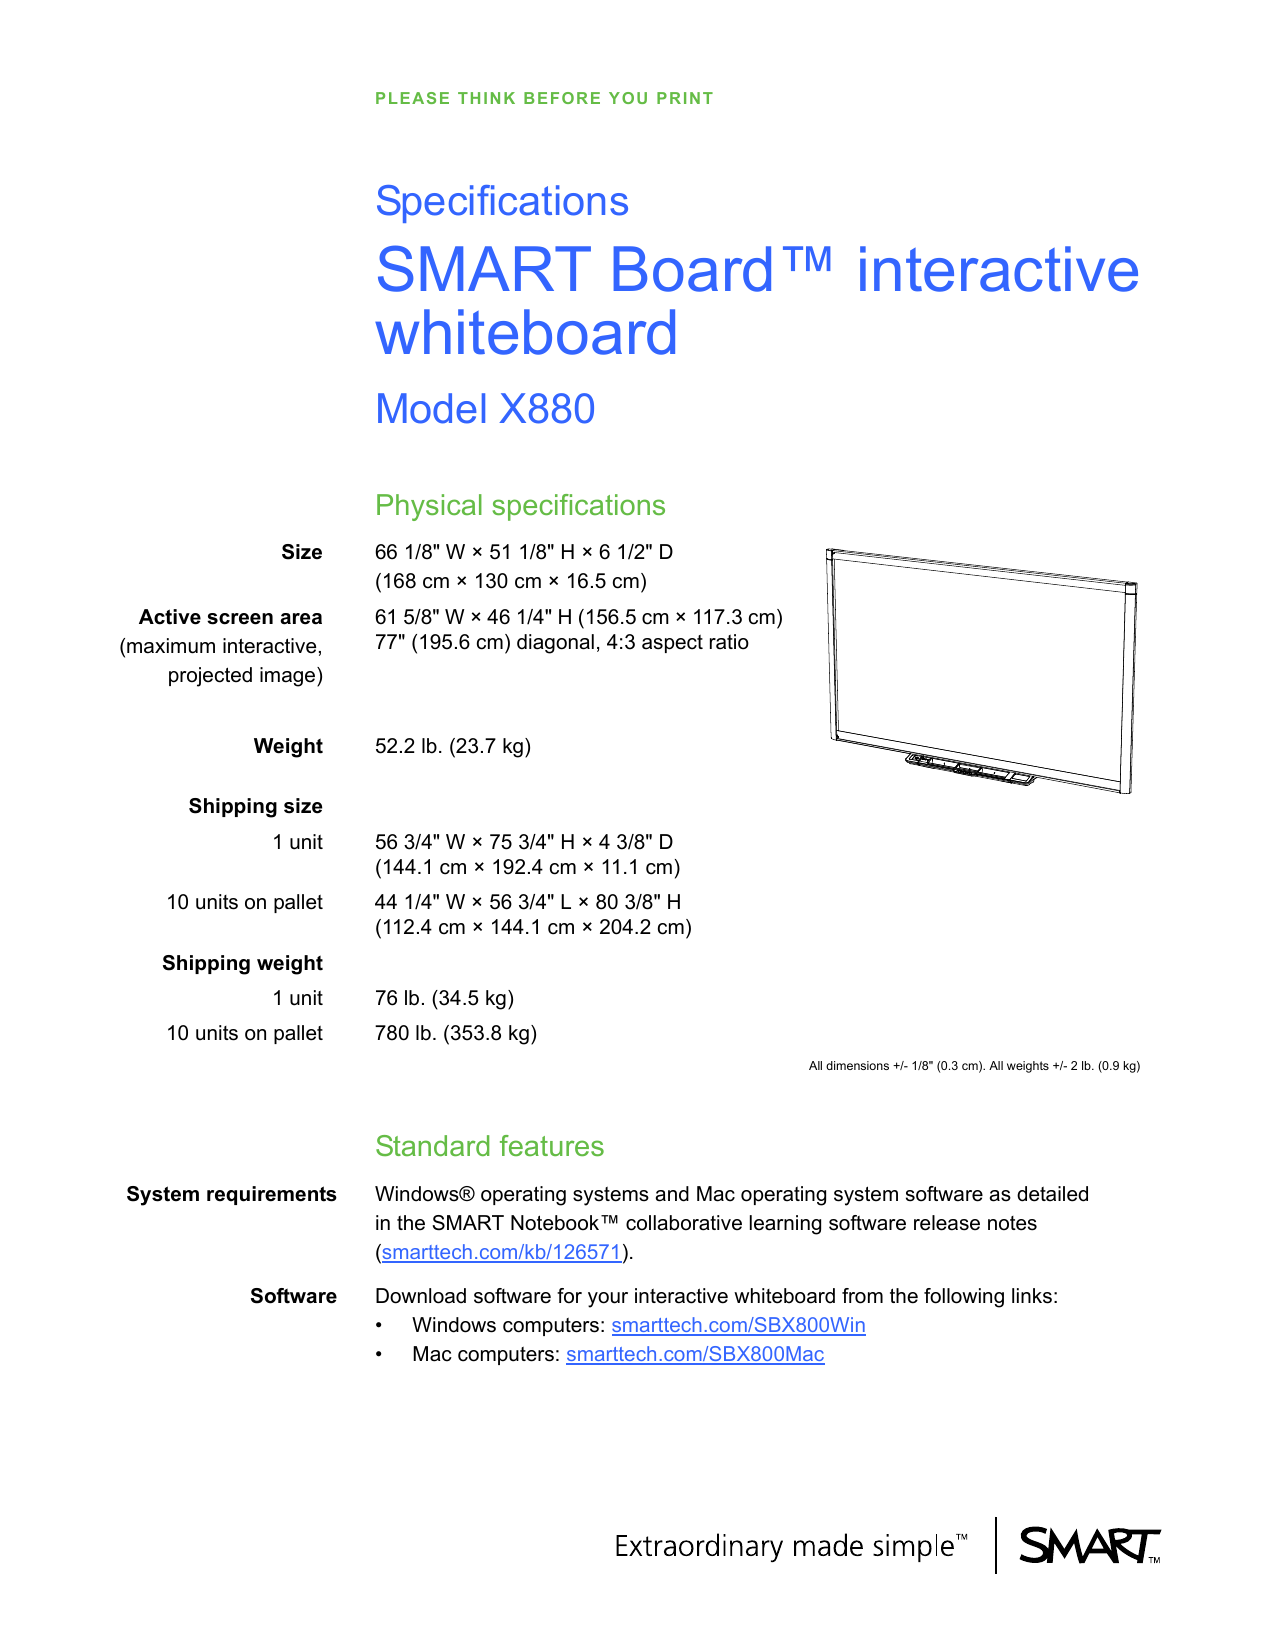 smartboard download for mac